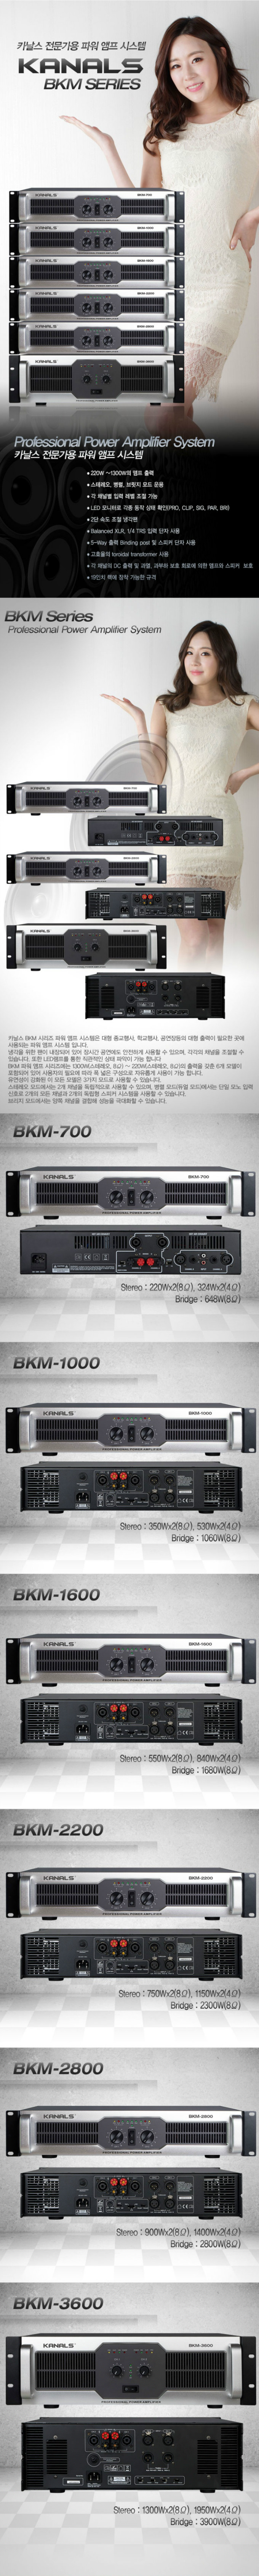 BKM36001.jpg